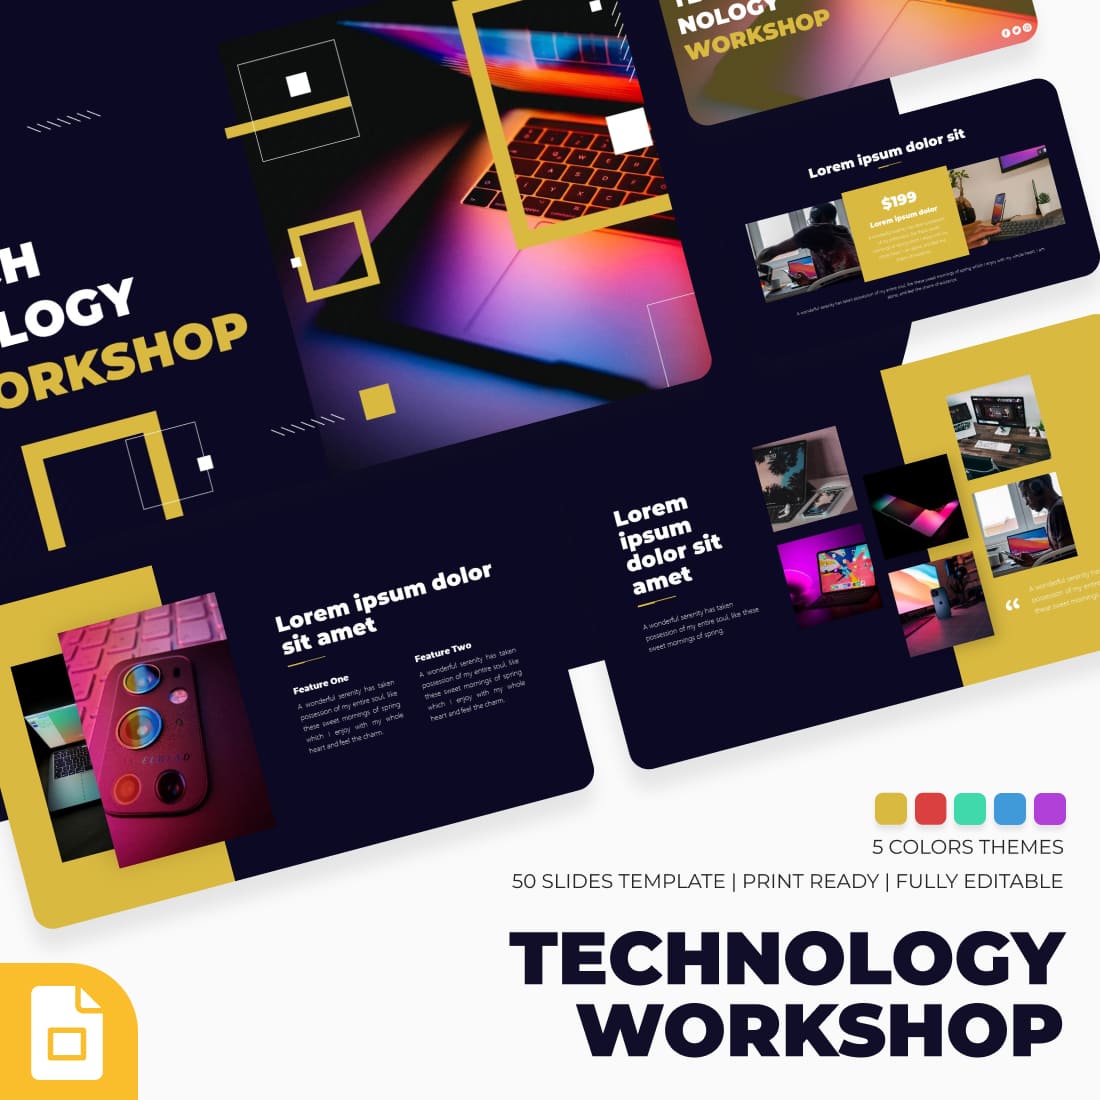 Workshop Technology Google Slides Theme main cover.